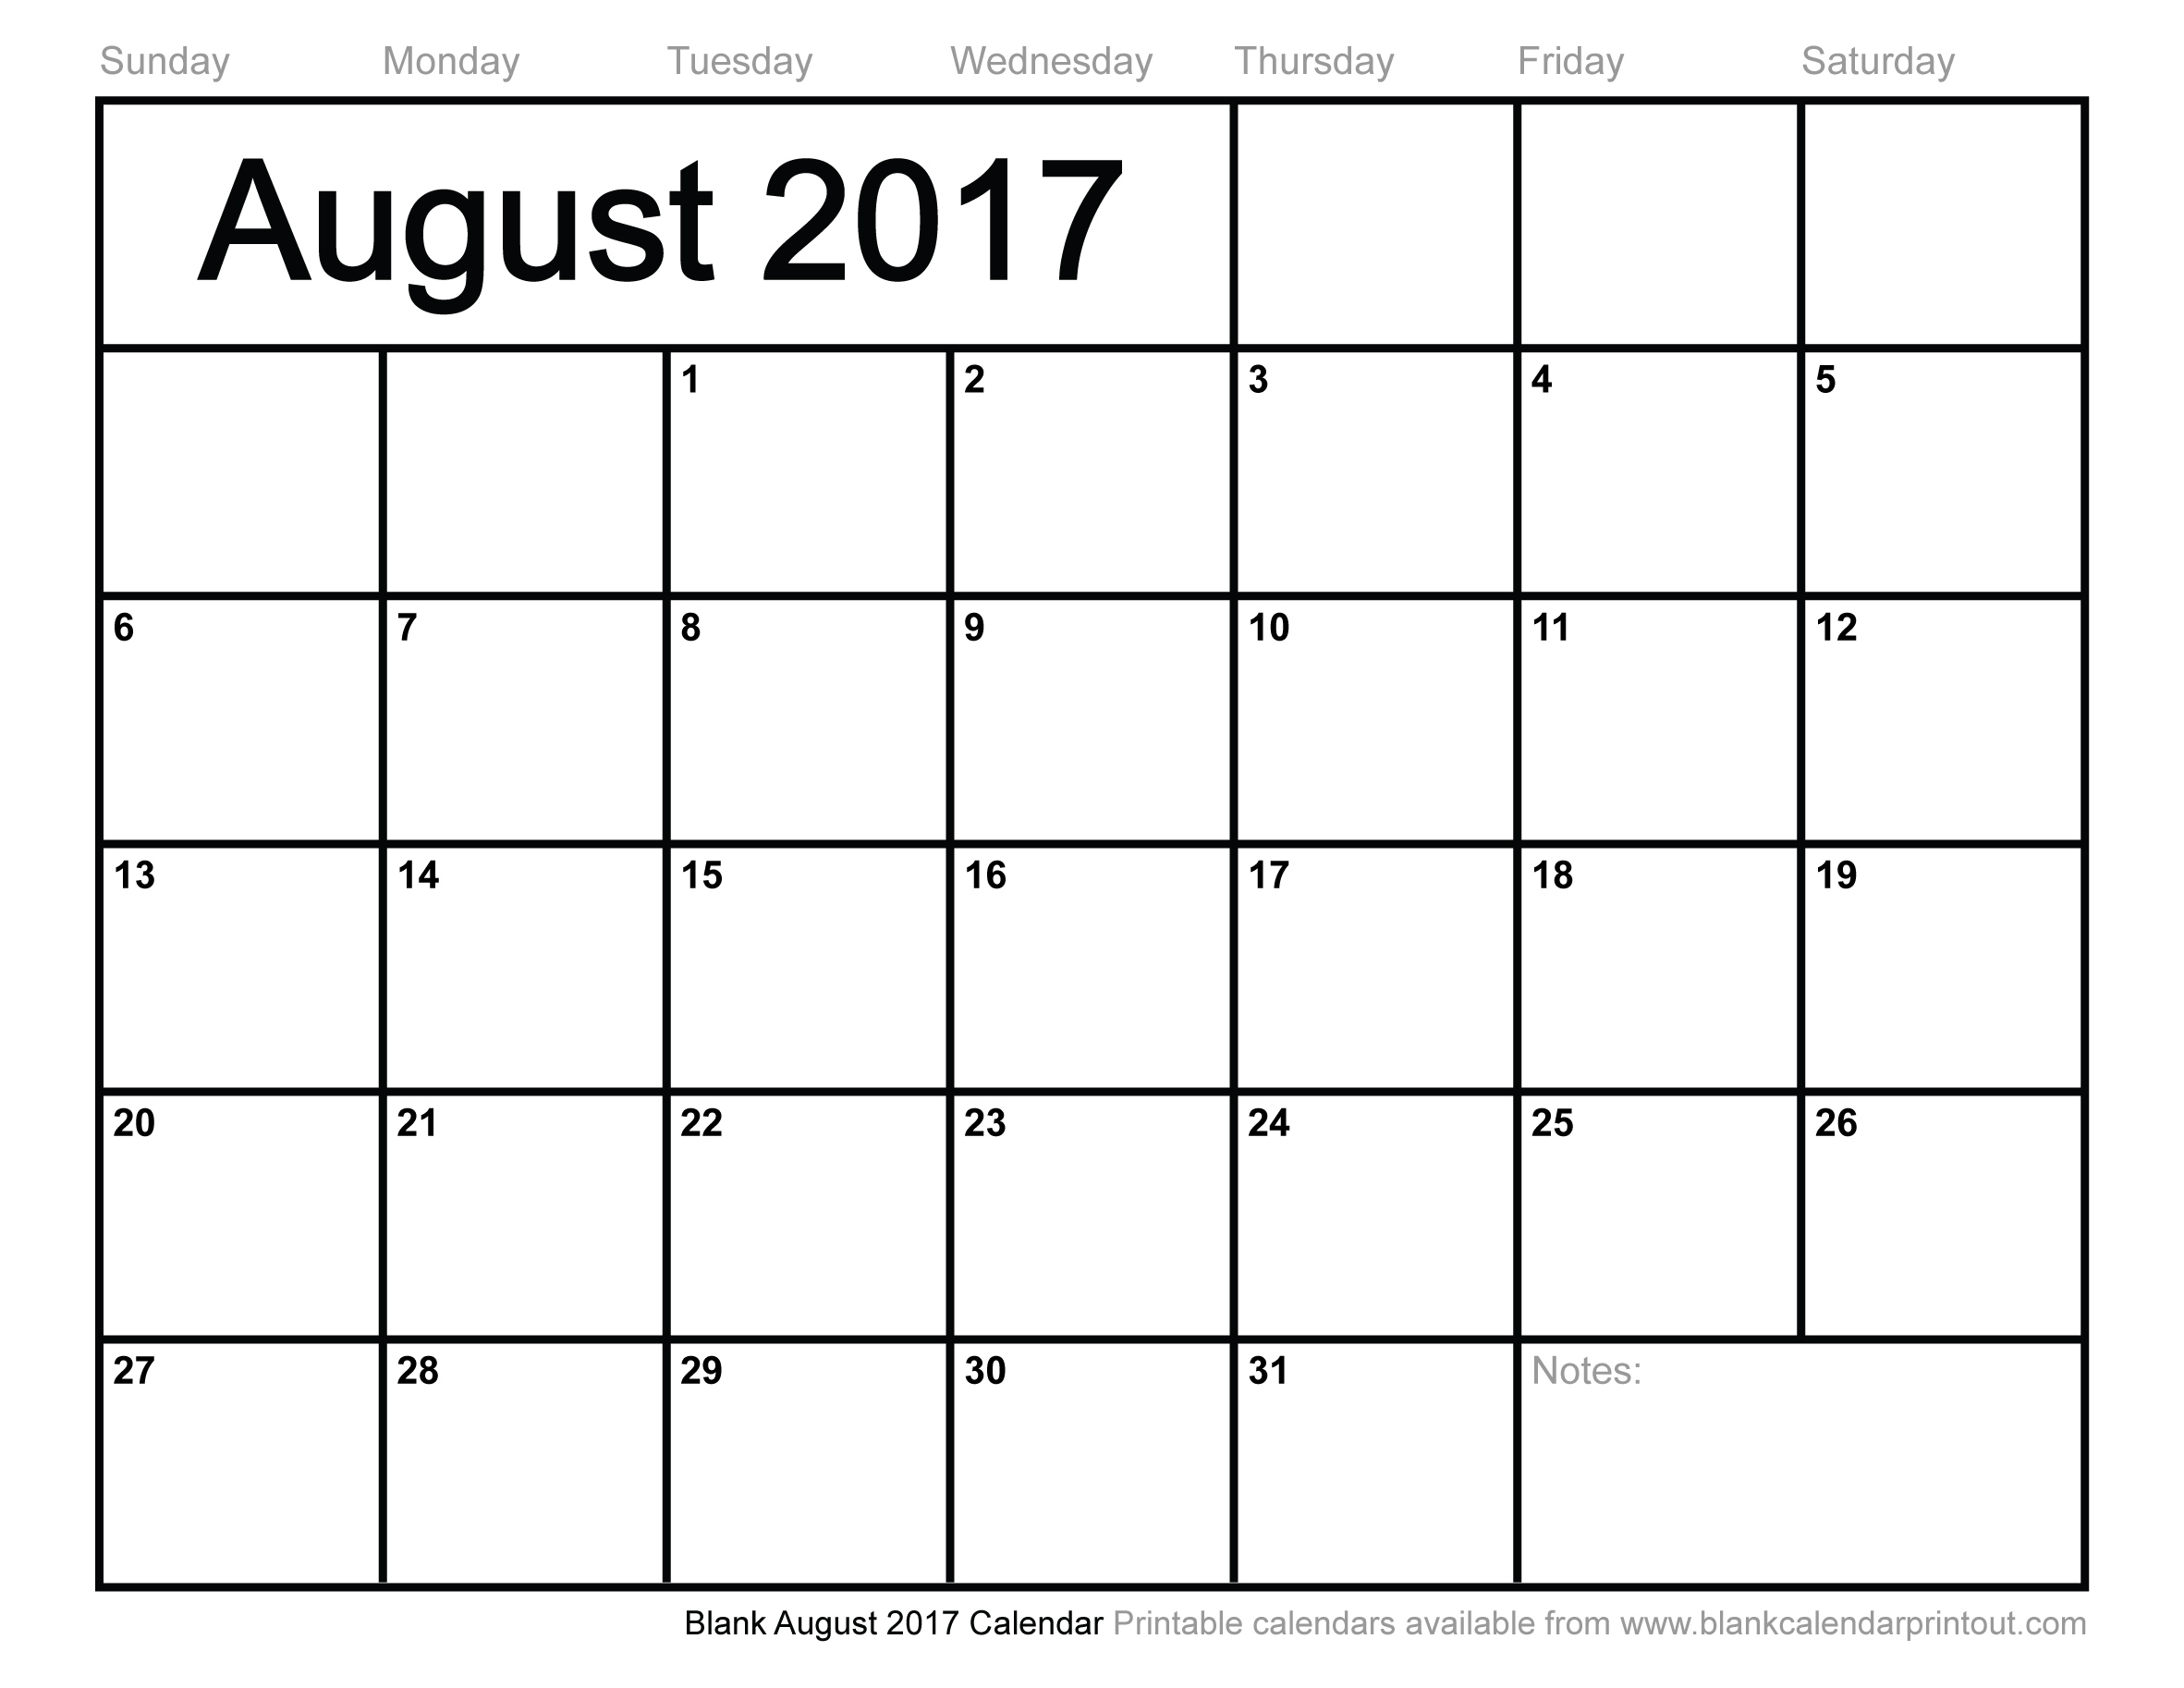 Blank August 2017 Calendar to Print